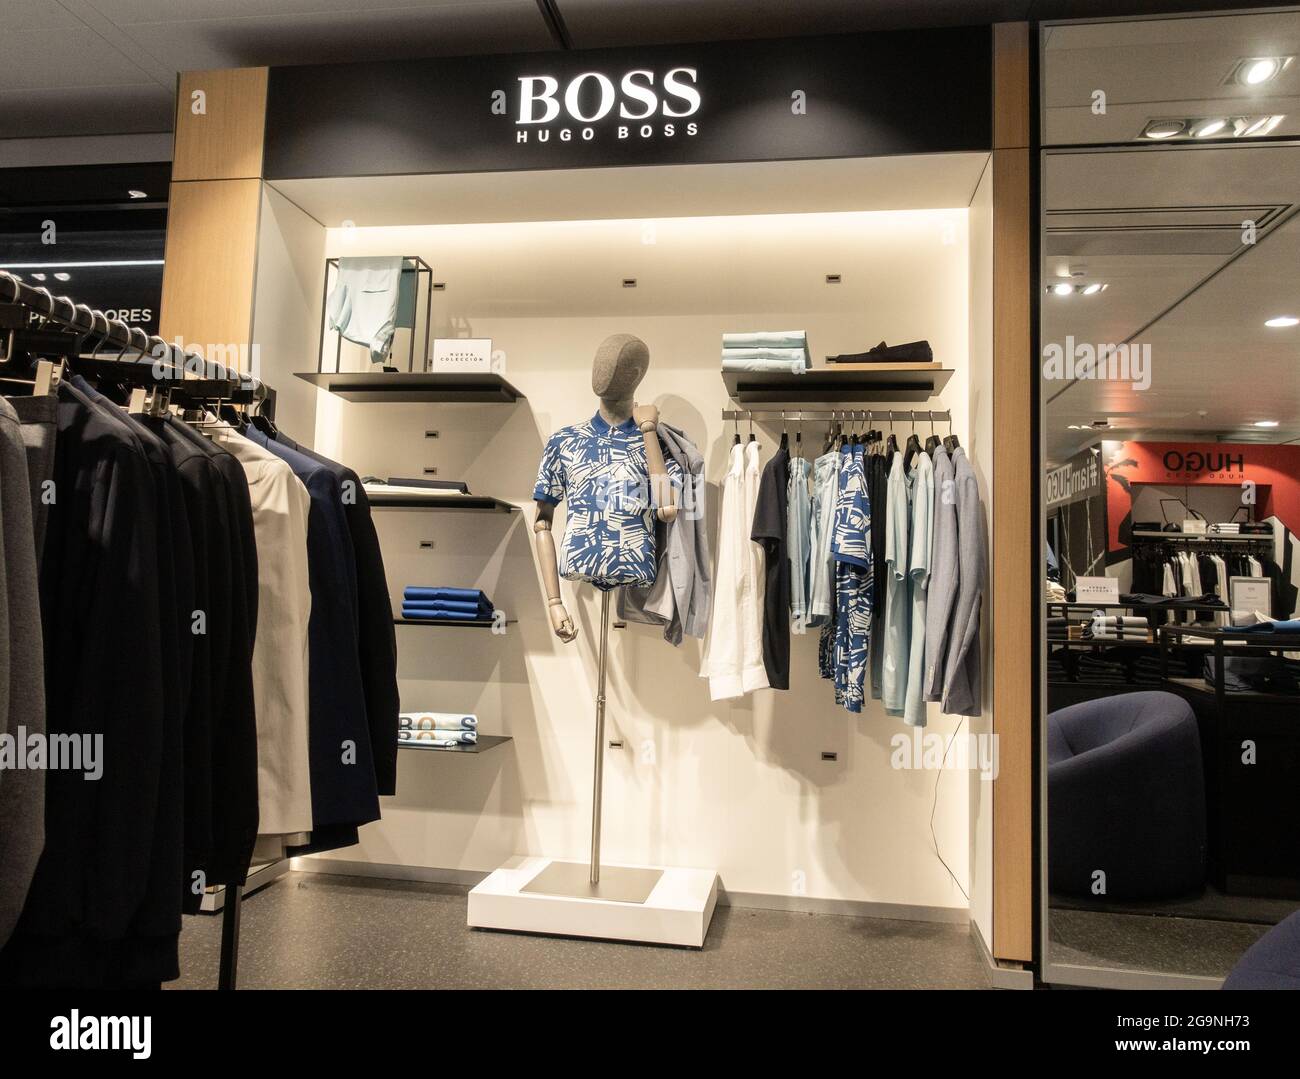 Hugo Boss store display Stock Photo Alamy